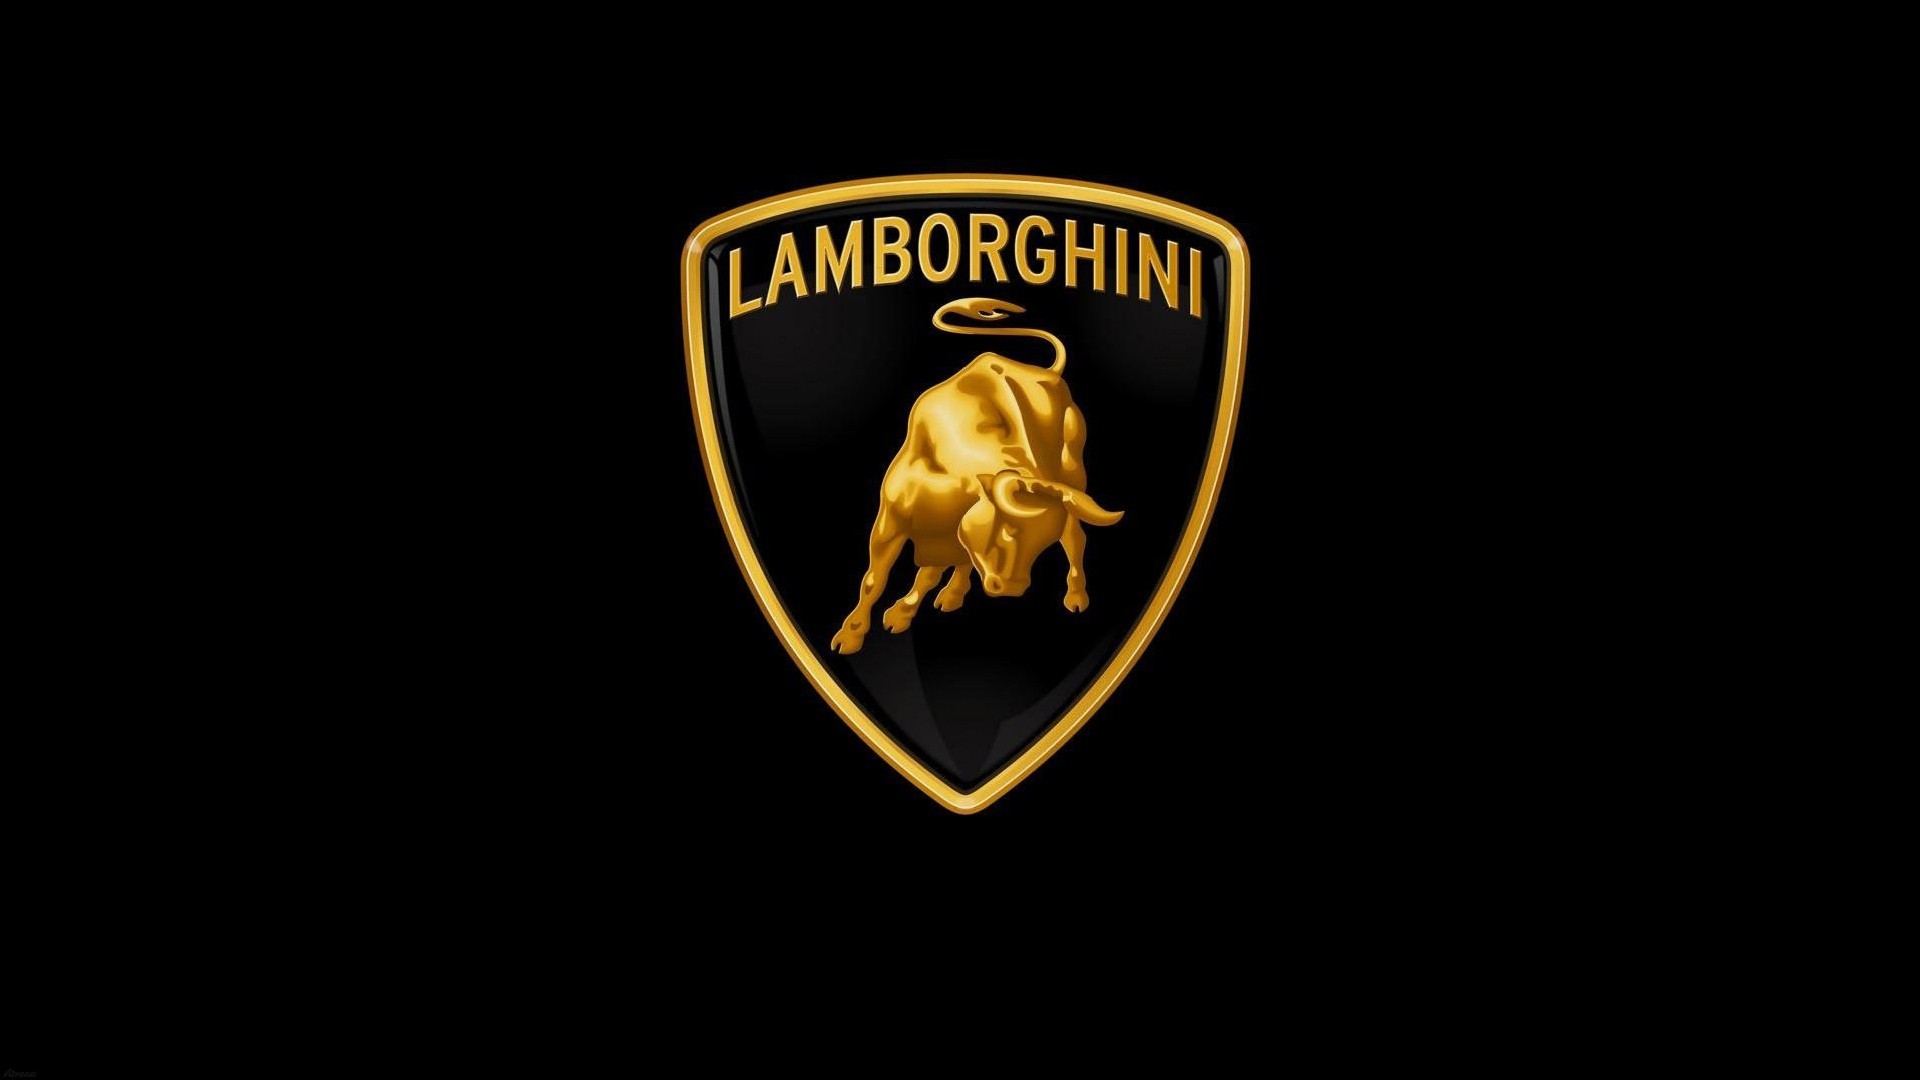 General 1920x1080 Lamborghini car logo black background supercars Italian Supercars vehicle italian cars brand